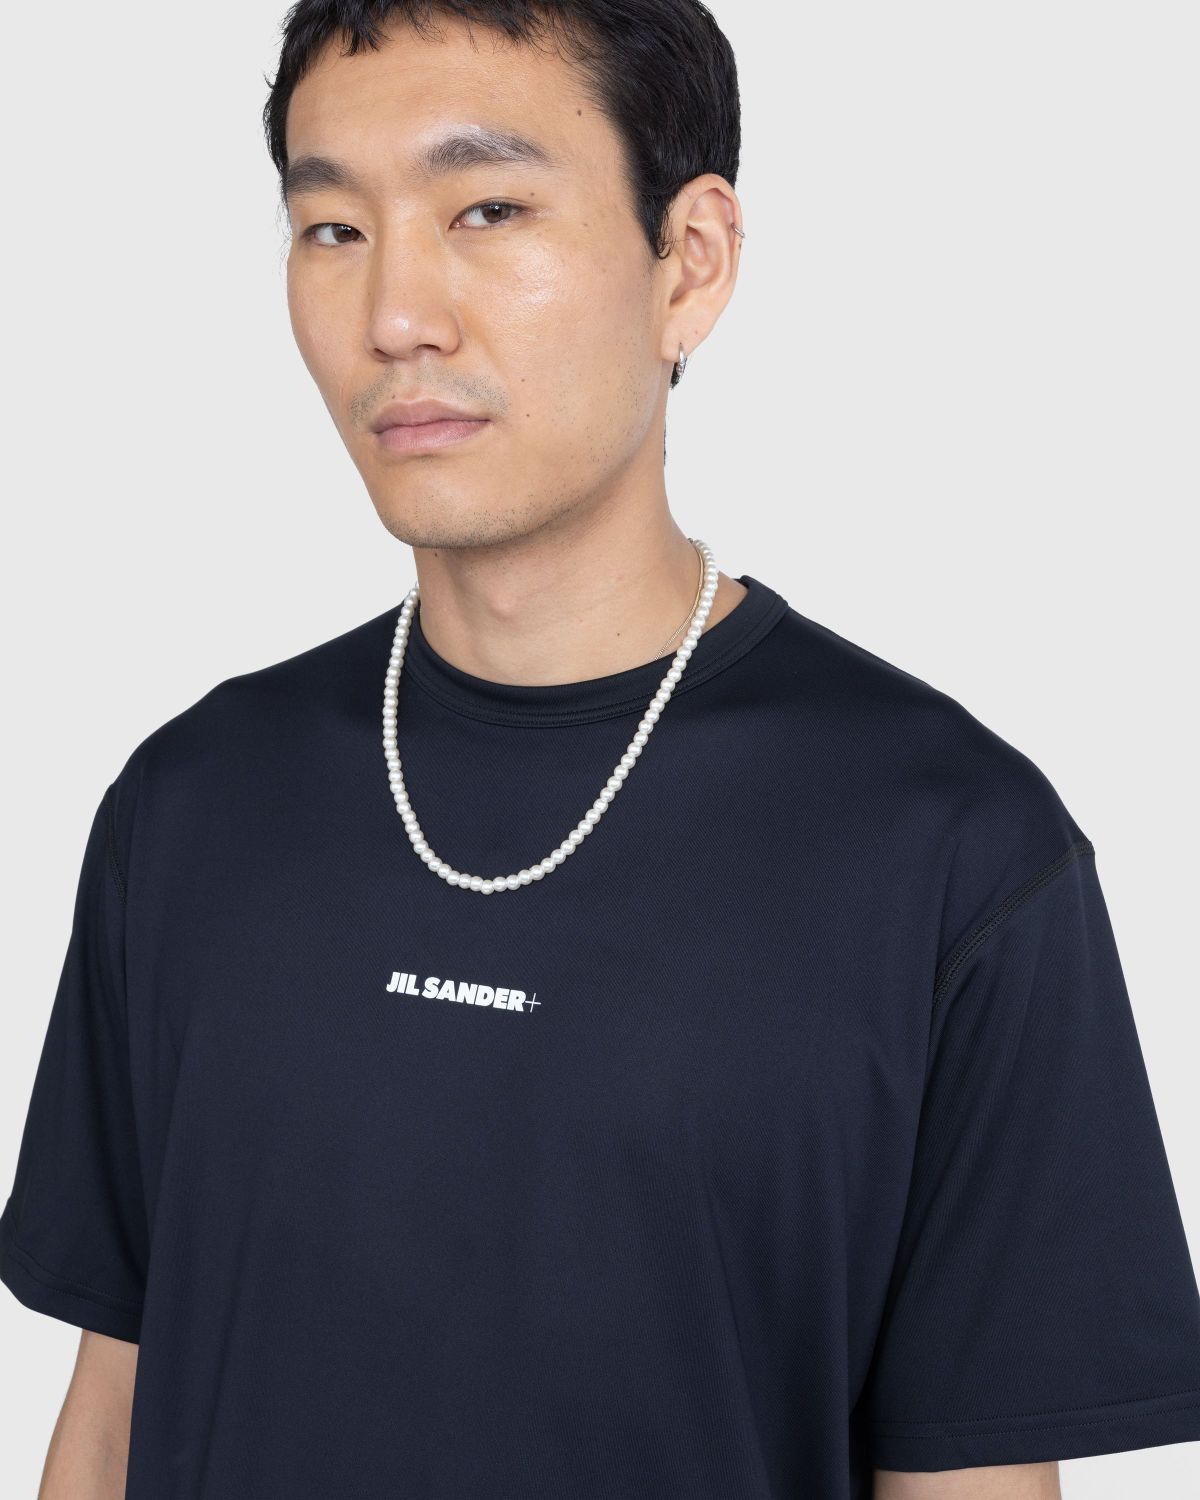 Jil Sander – Logo T-Shirt Black - Tops - Black - Image 2